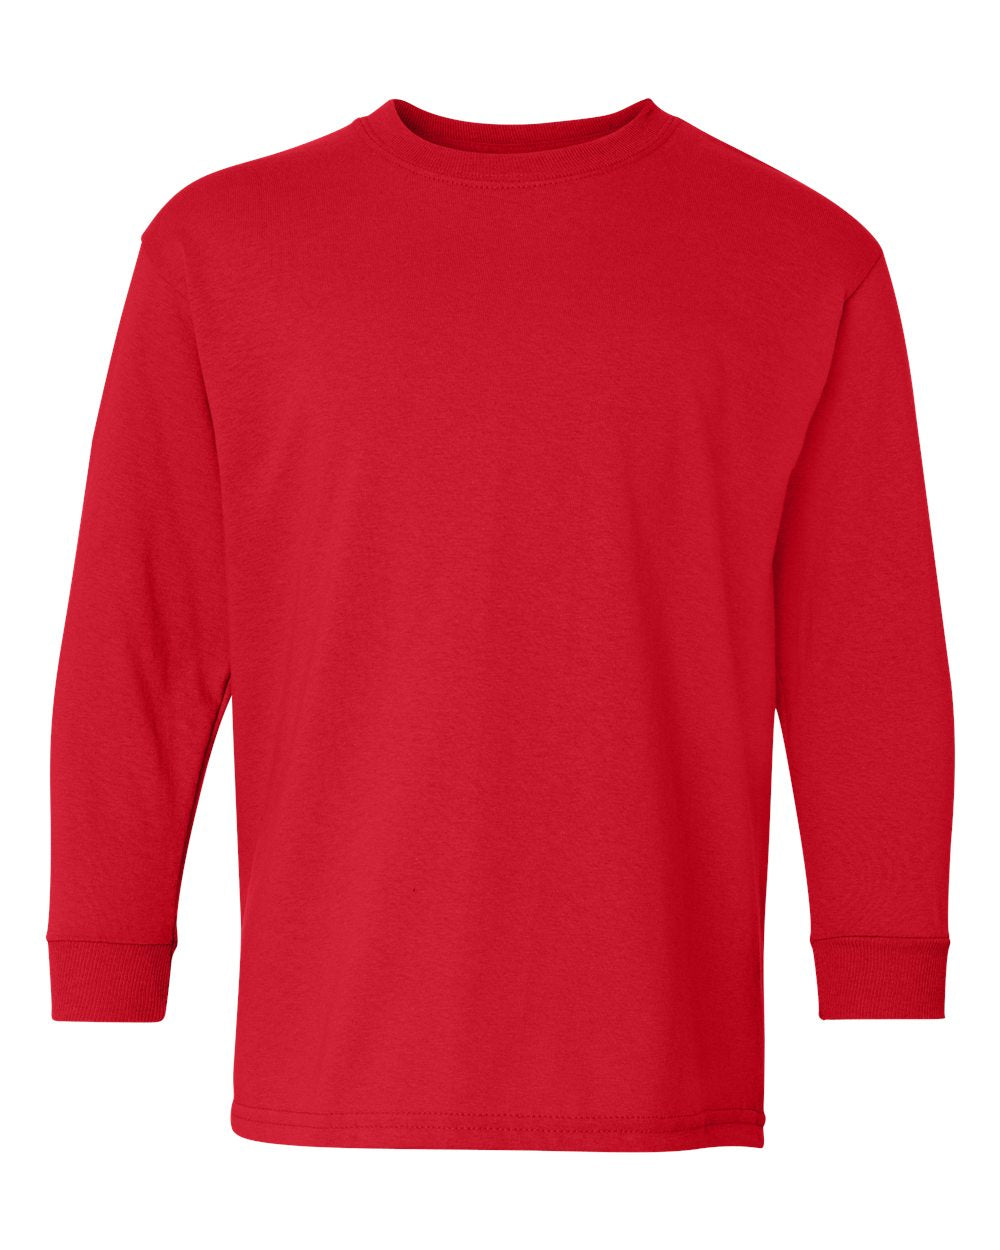 Gildan Youth Long Sleeve (5400b) in Red